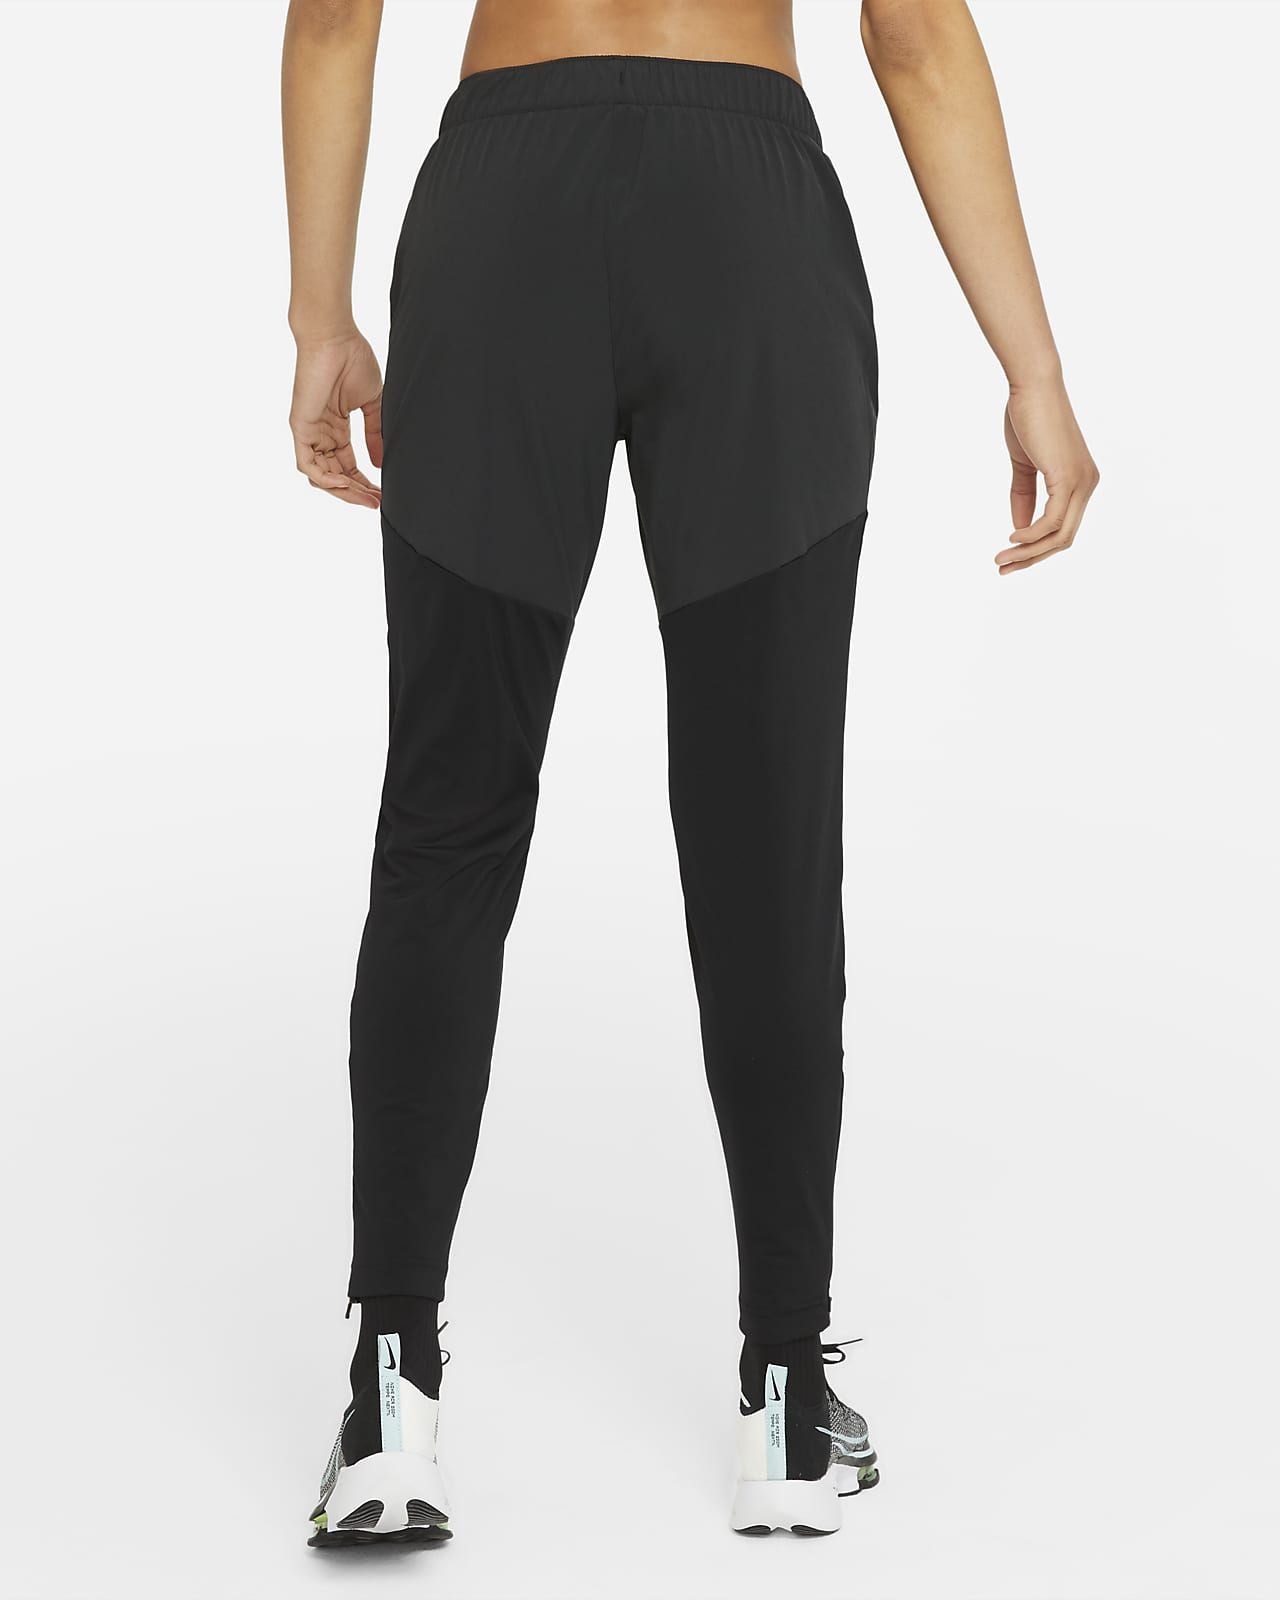 Nike Dri-FIT Essential Women's Running Trousers. SI